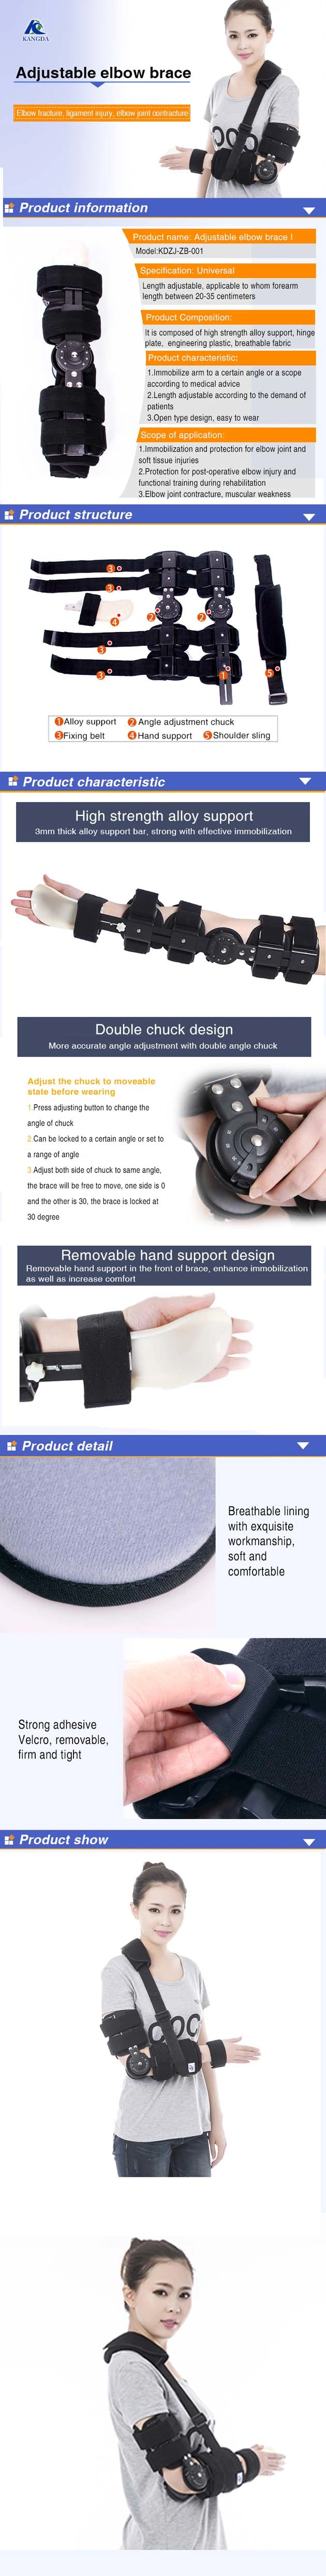 Kangda Brand Adjustable Elbow Brace OEM Available